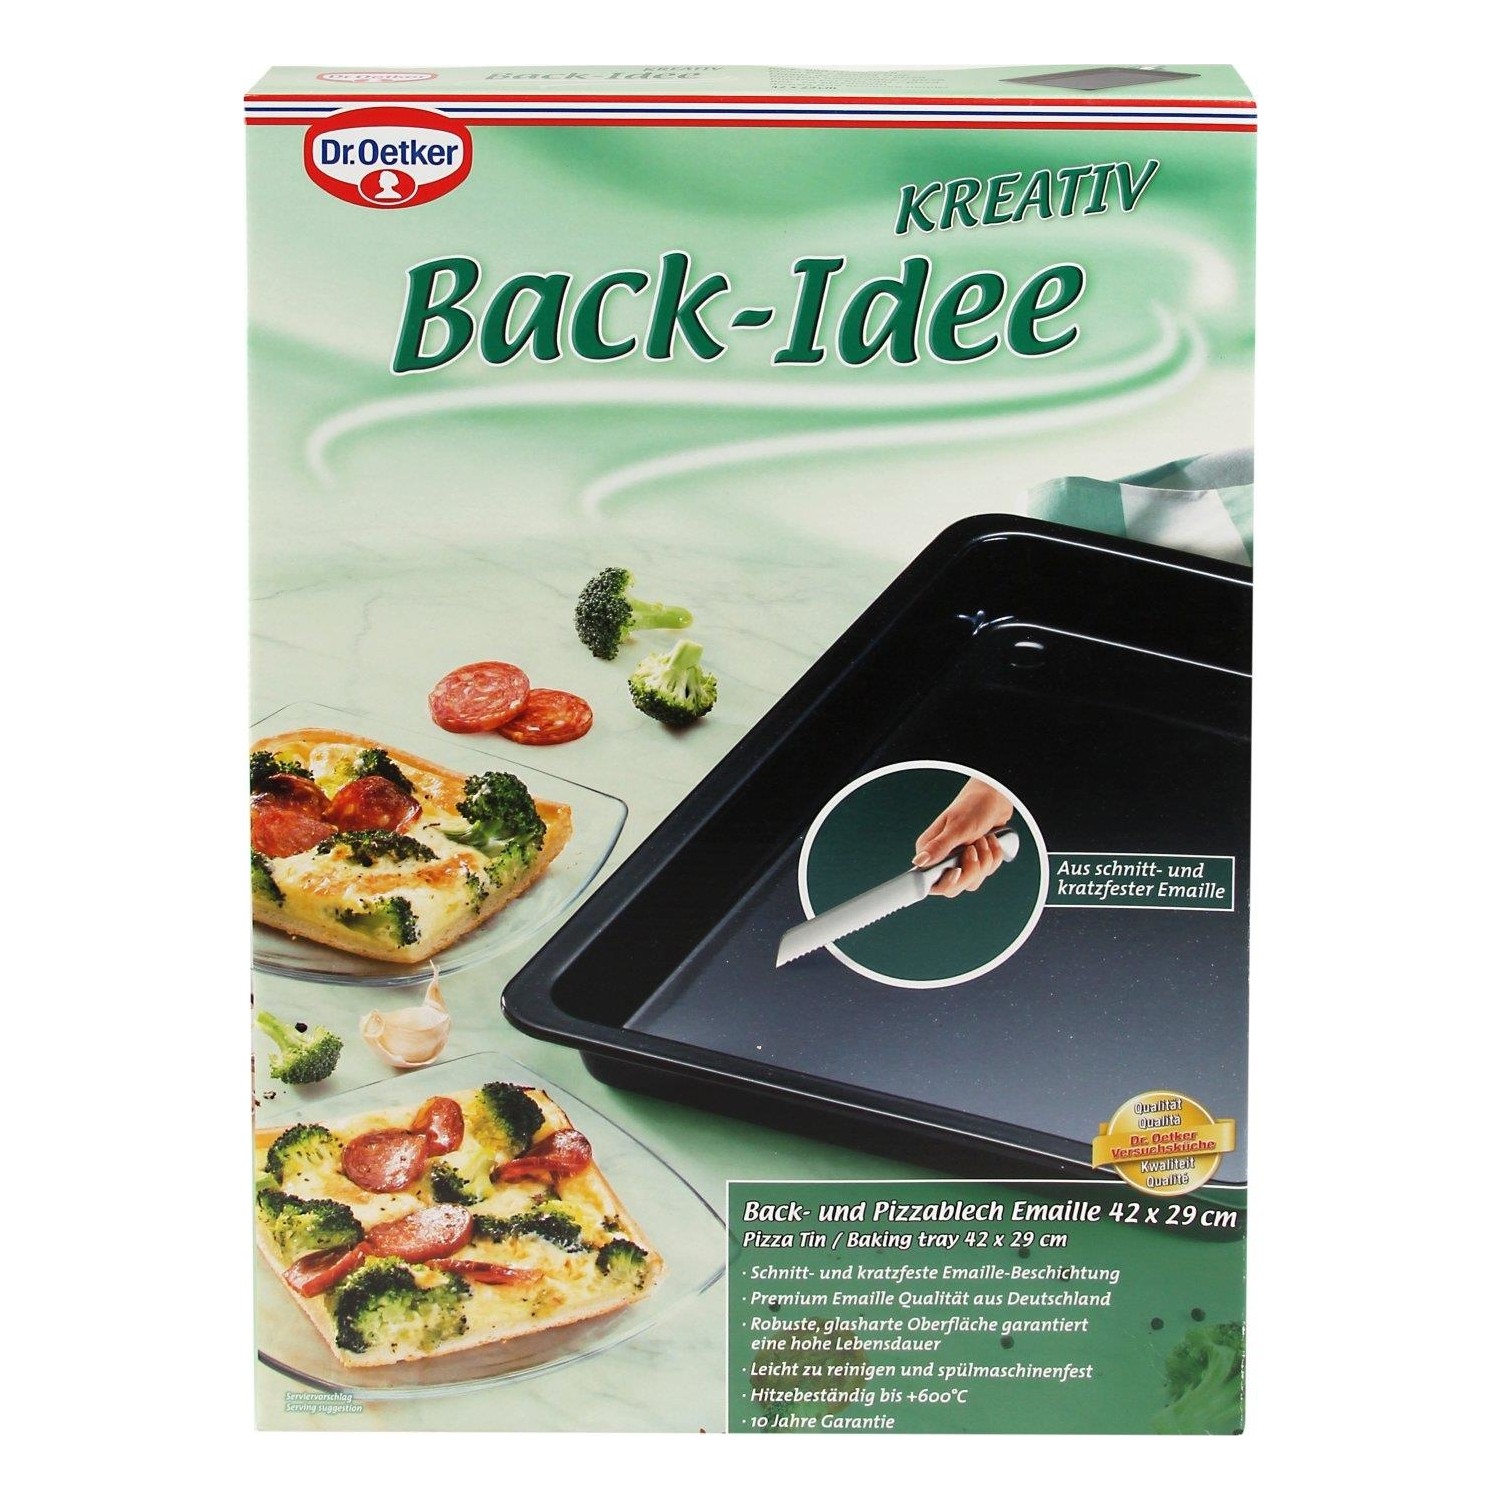 Dr. Oetker 1308 Back Idee Kreativ 42 x 39 cm Pizza Tepsisi Fiyatı